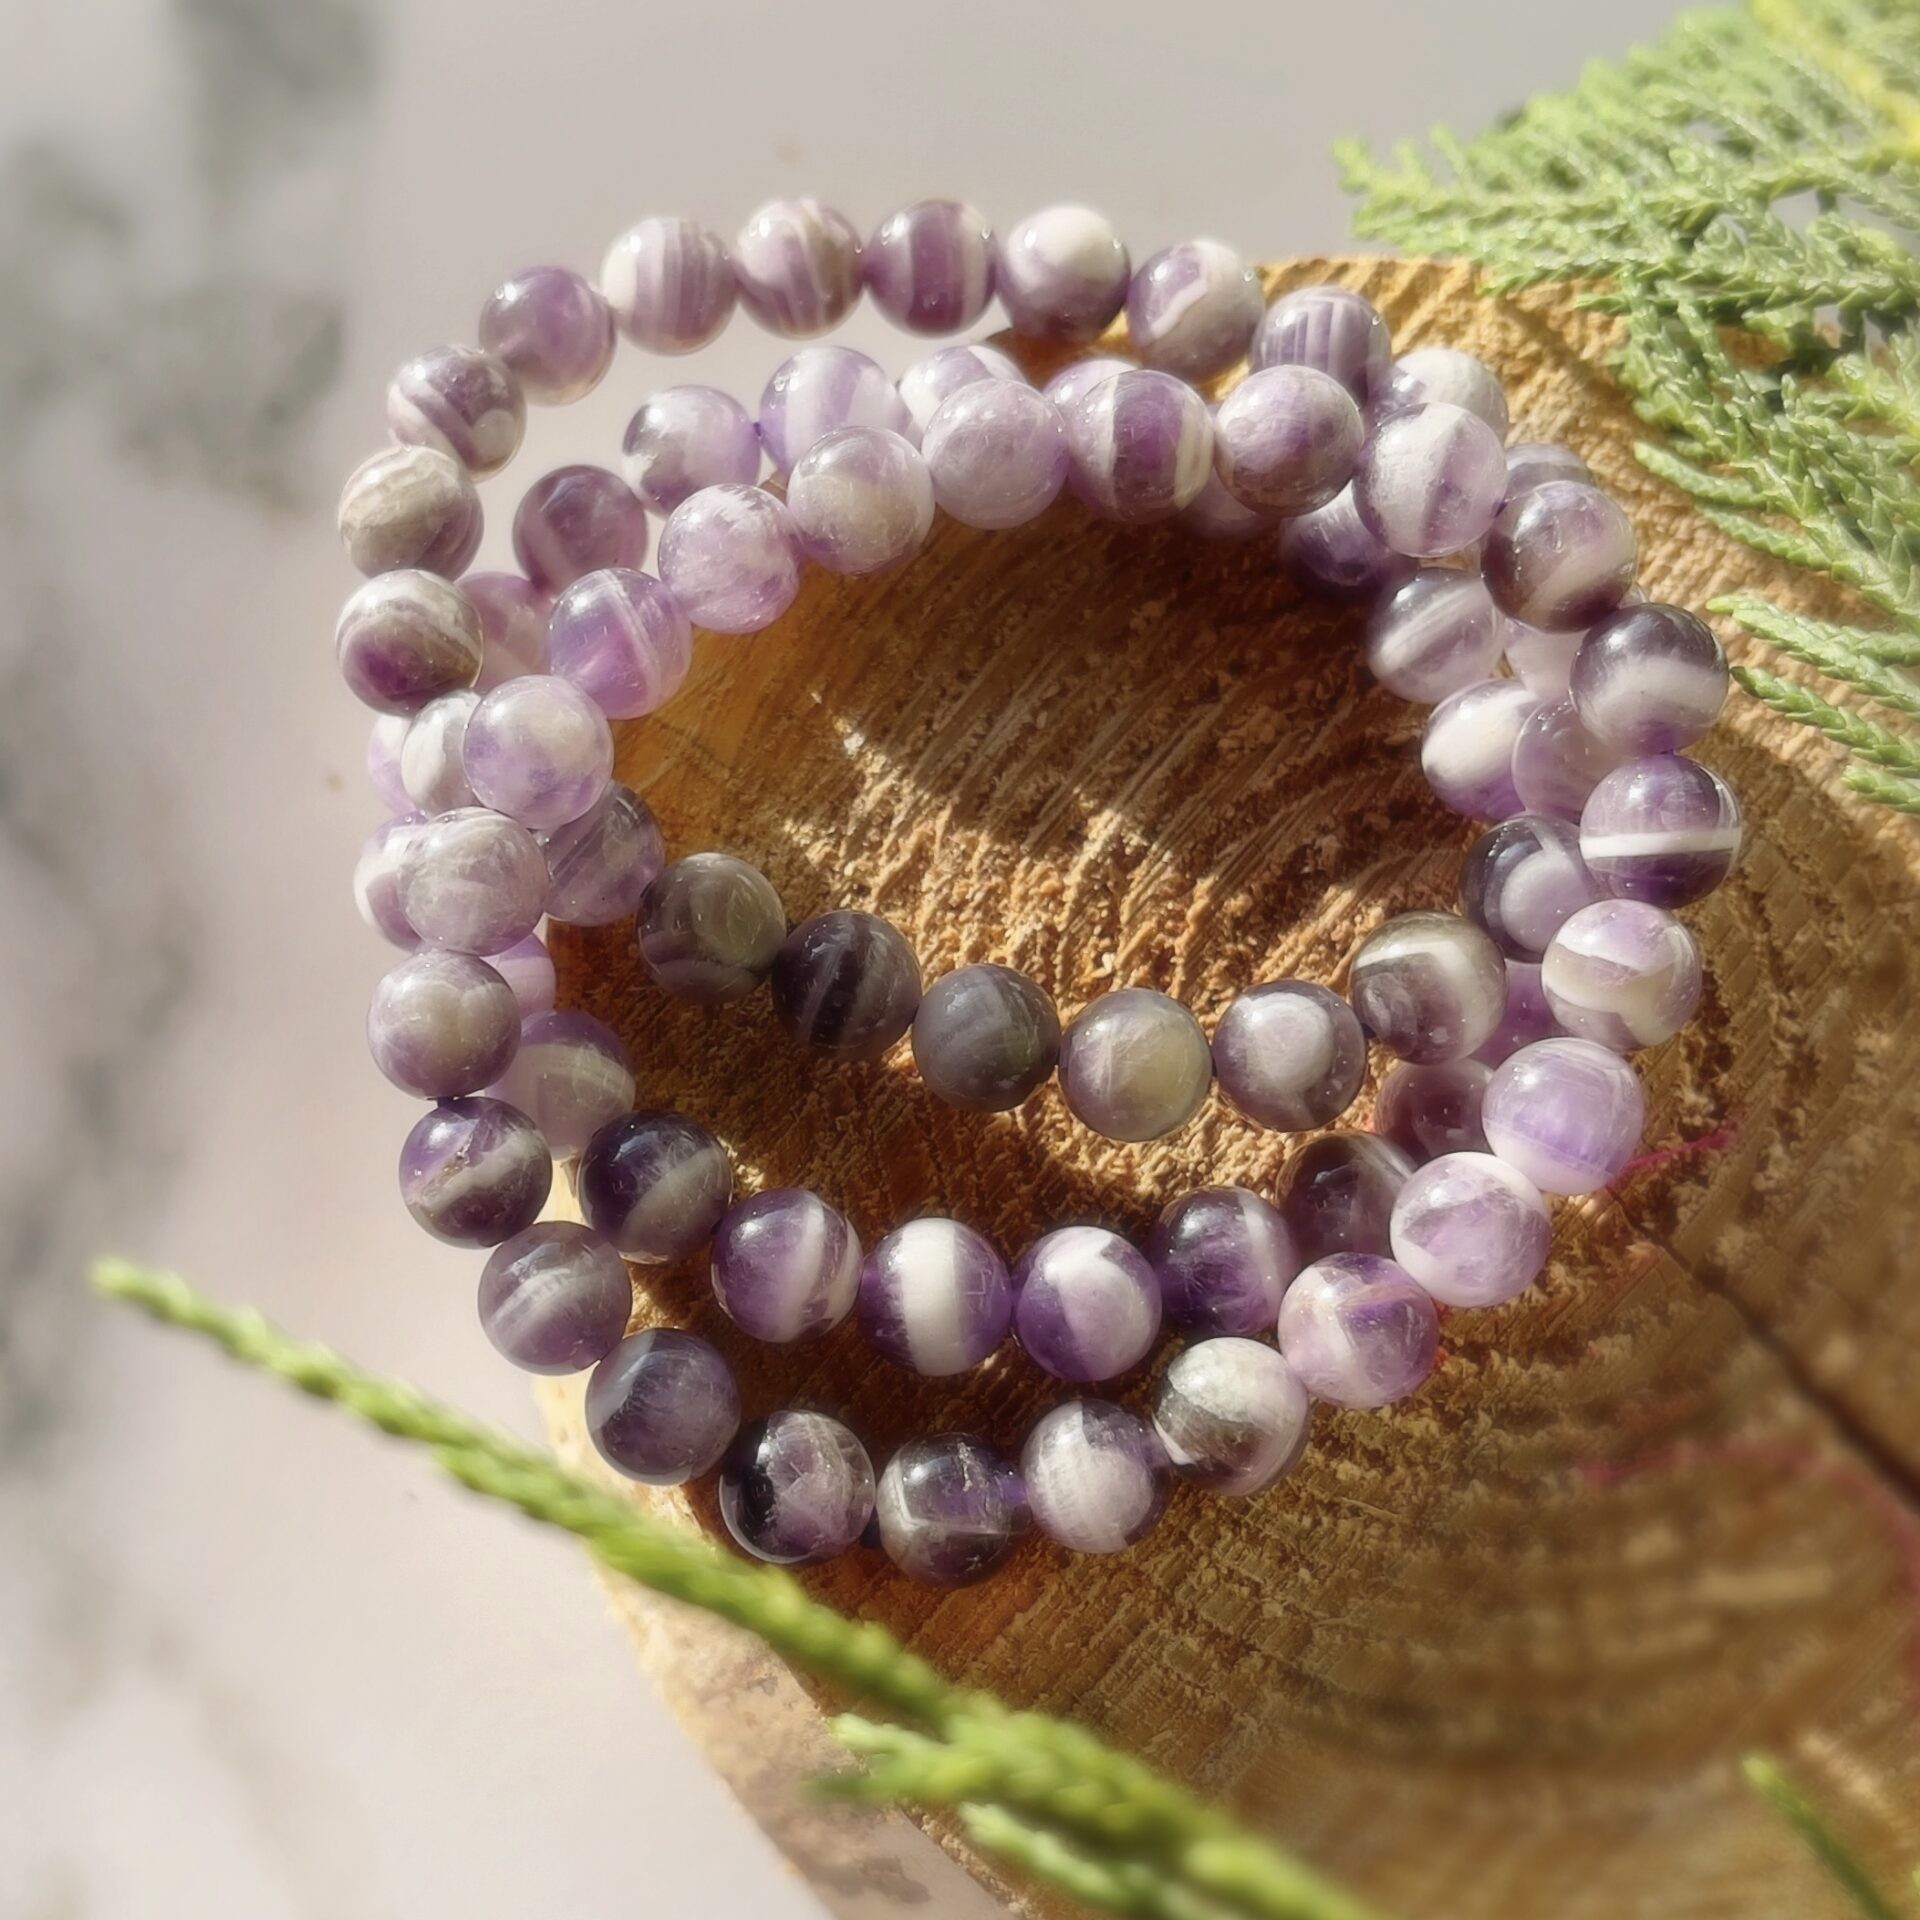 Spiritual Aura Beads Bracelet in Purple